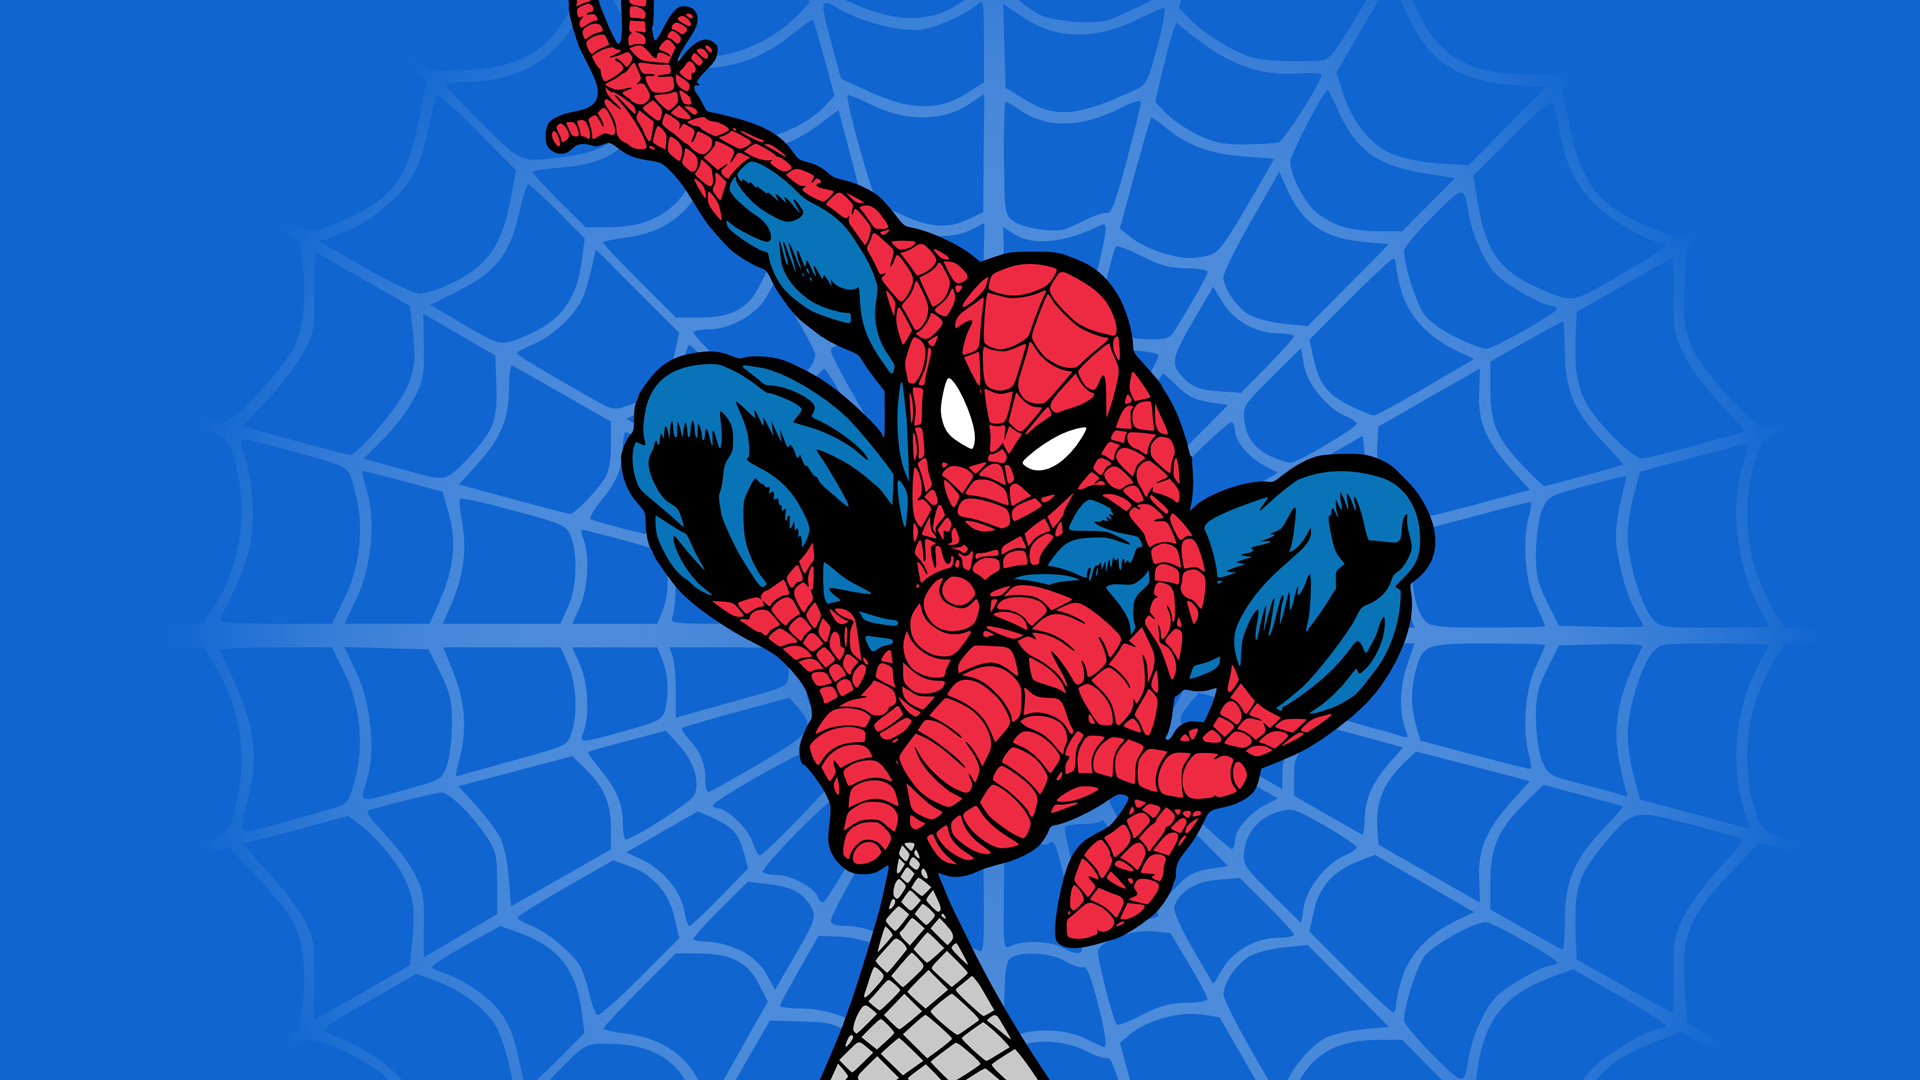 Spiderman Wallpaper Image #Hq8. Spiderman picture, Spiderman